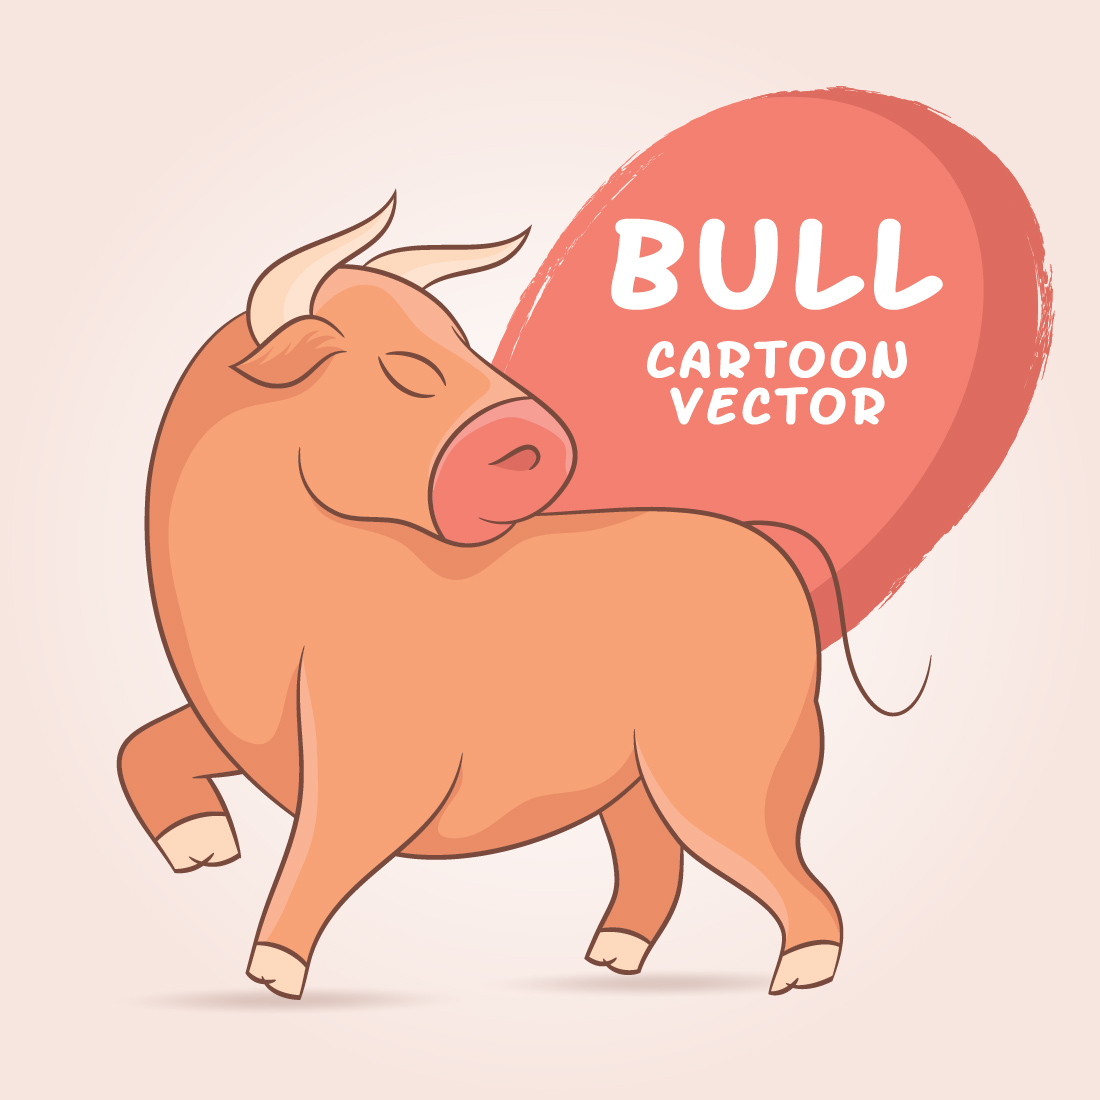 Cute 4 Bull or Buffalo Cartoon vector illustration.